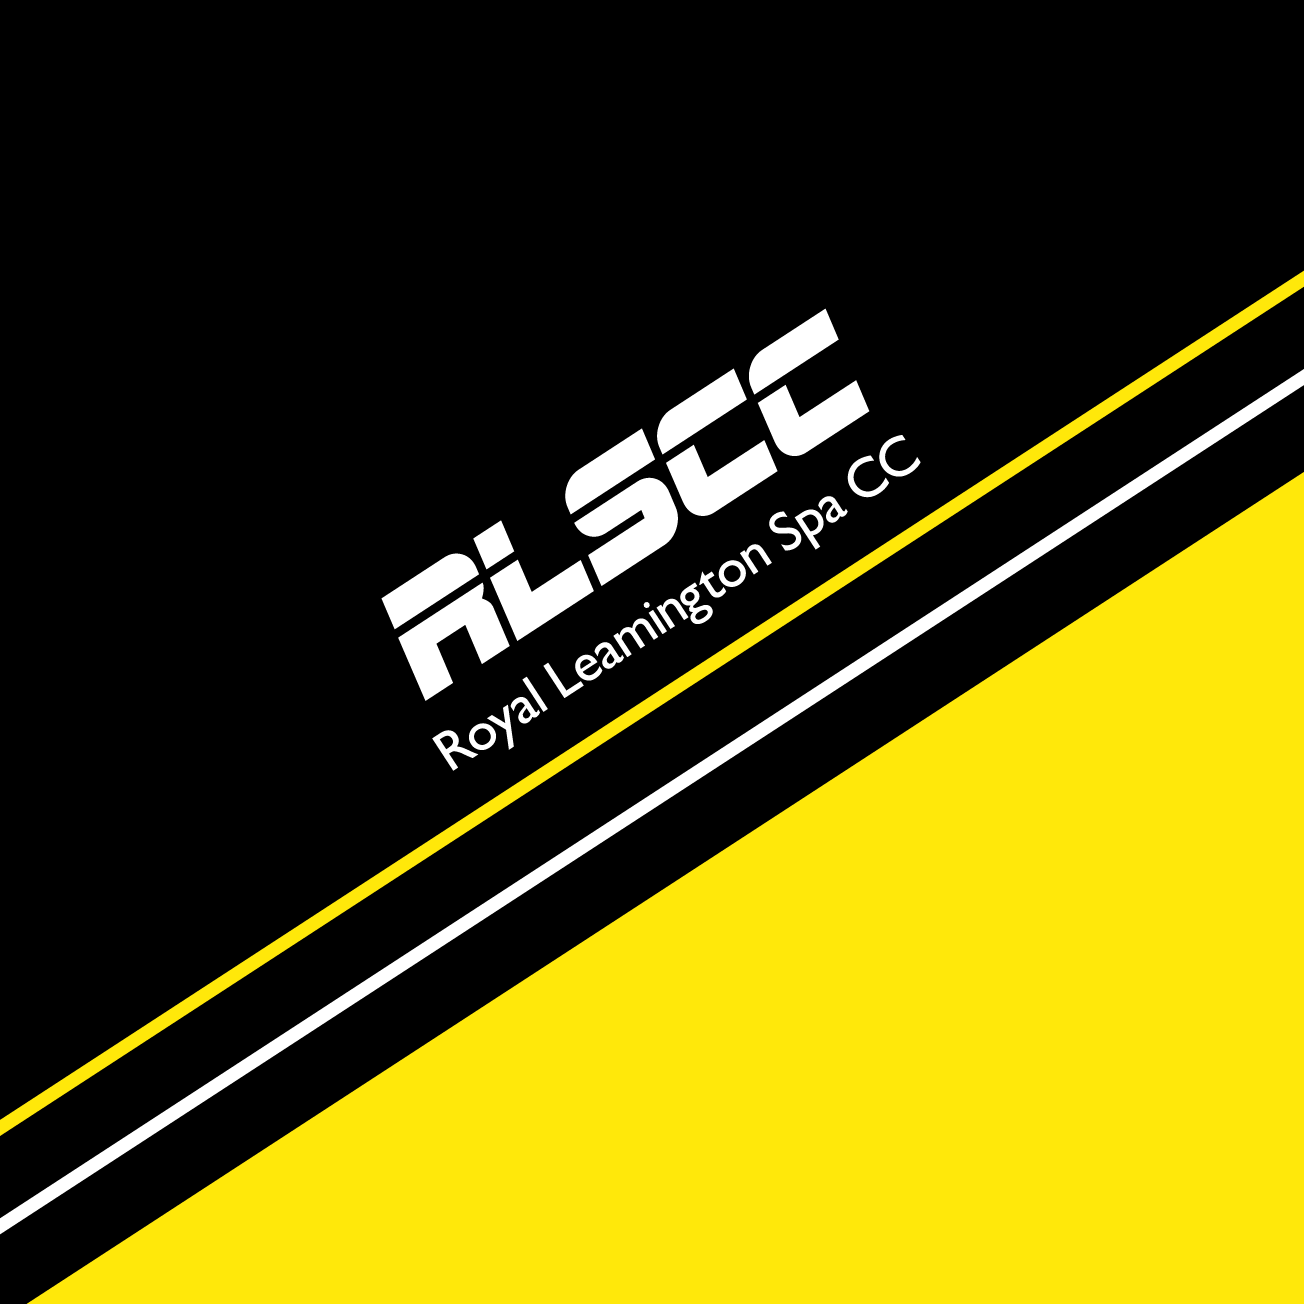 Club Image for RLSCC